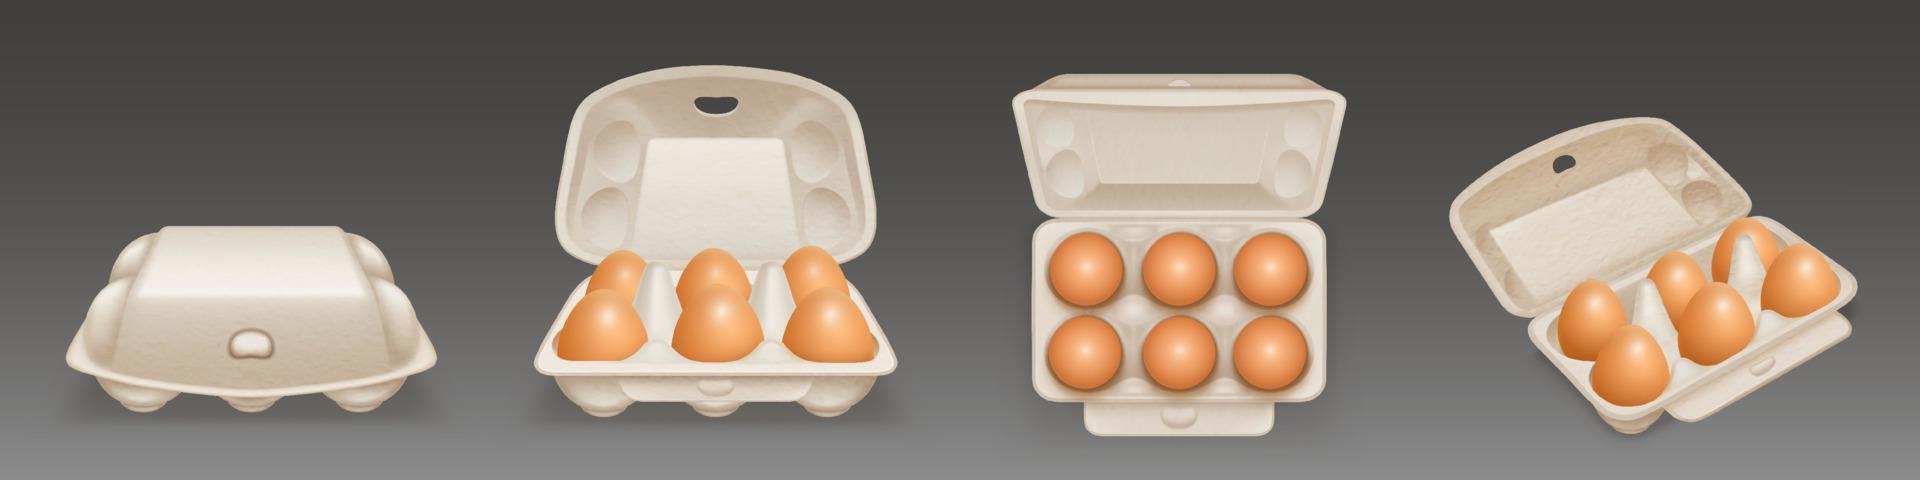 Carton egg tray, blank box package mockup vector